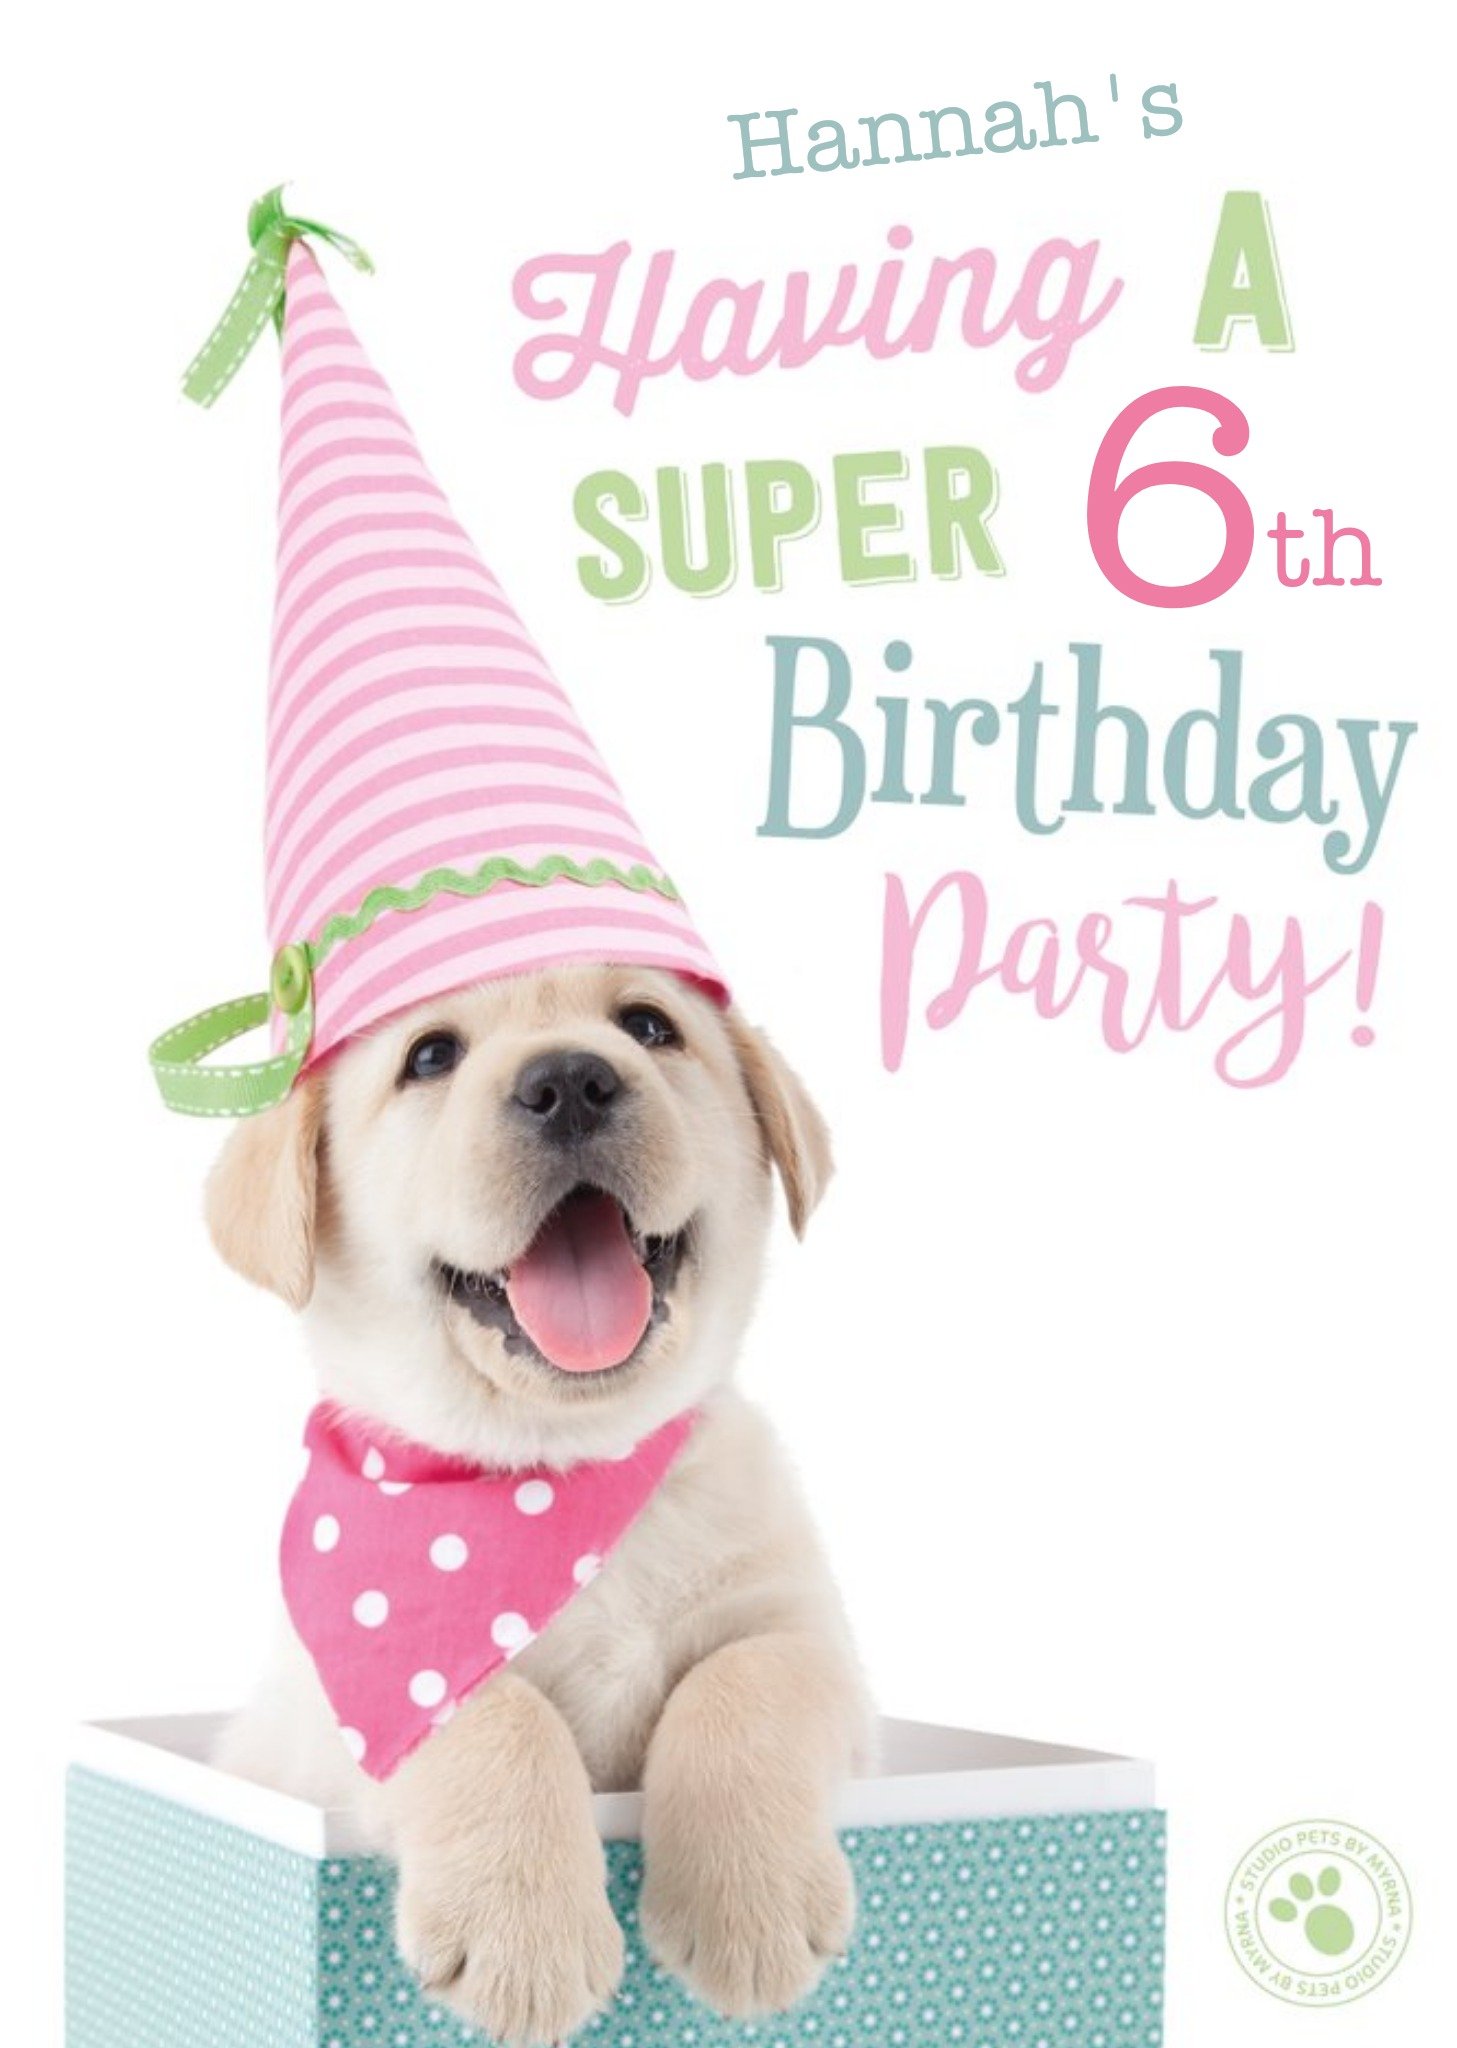 Studio Pets Cute Puppy Birthday Party Invitation, Standard Card